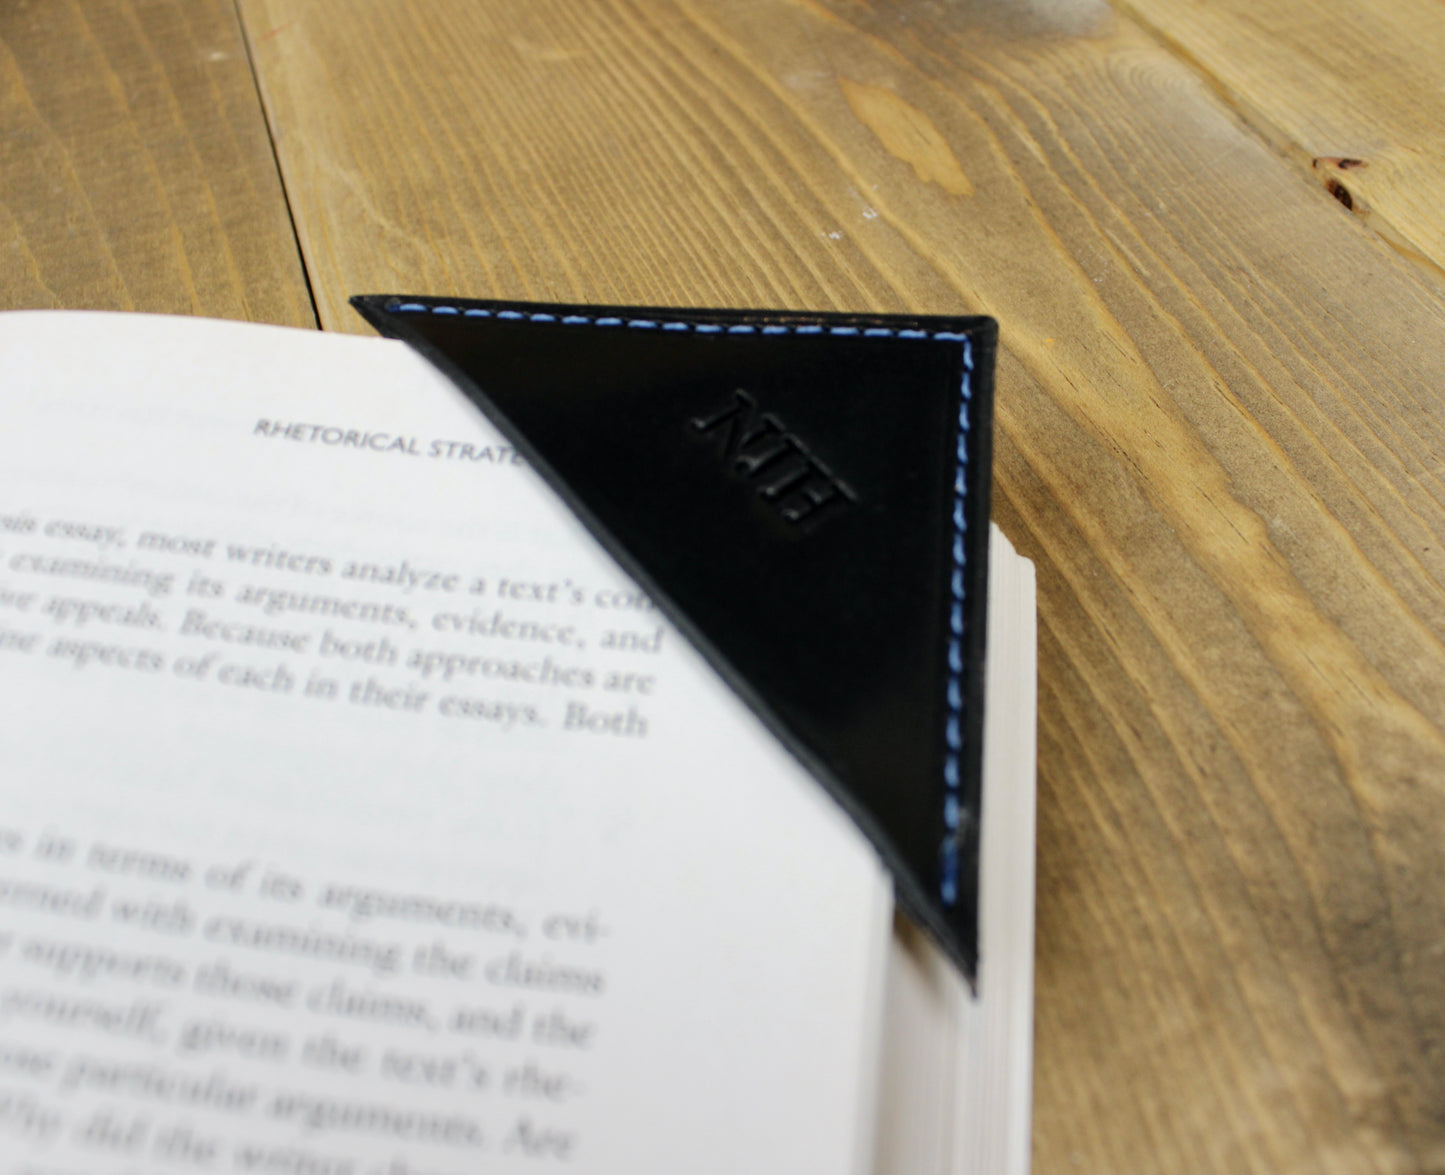 Leather Corner Bookmark